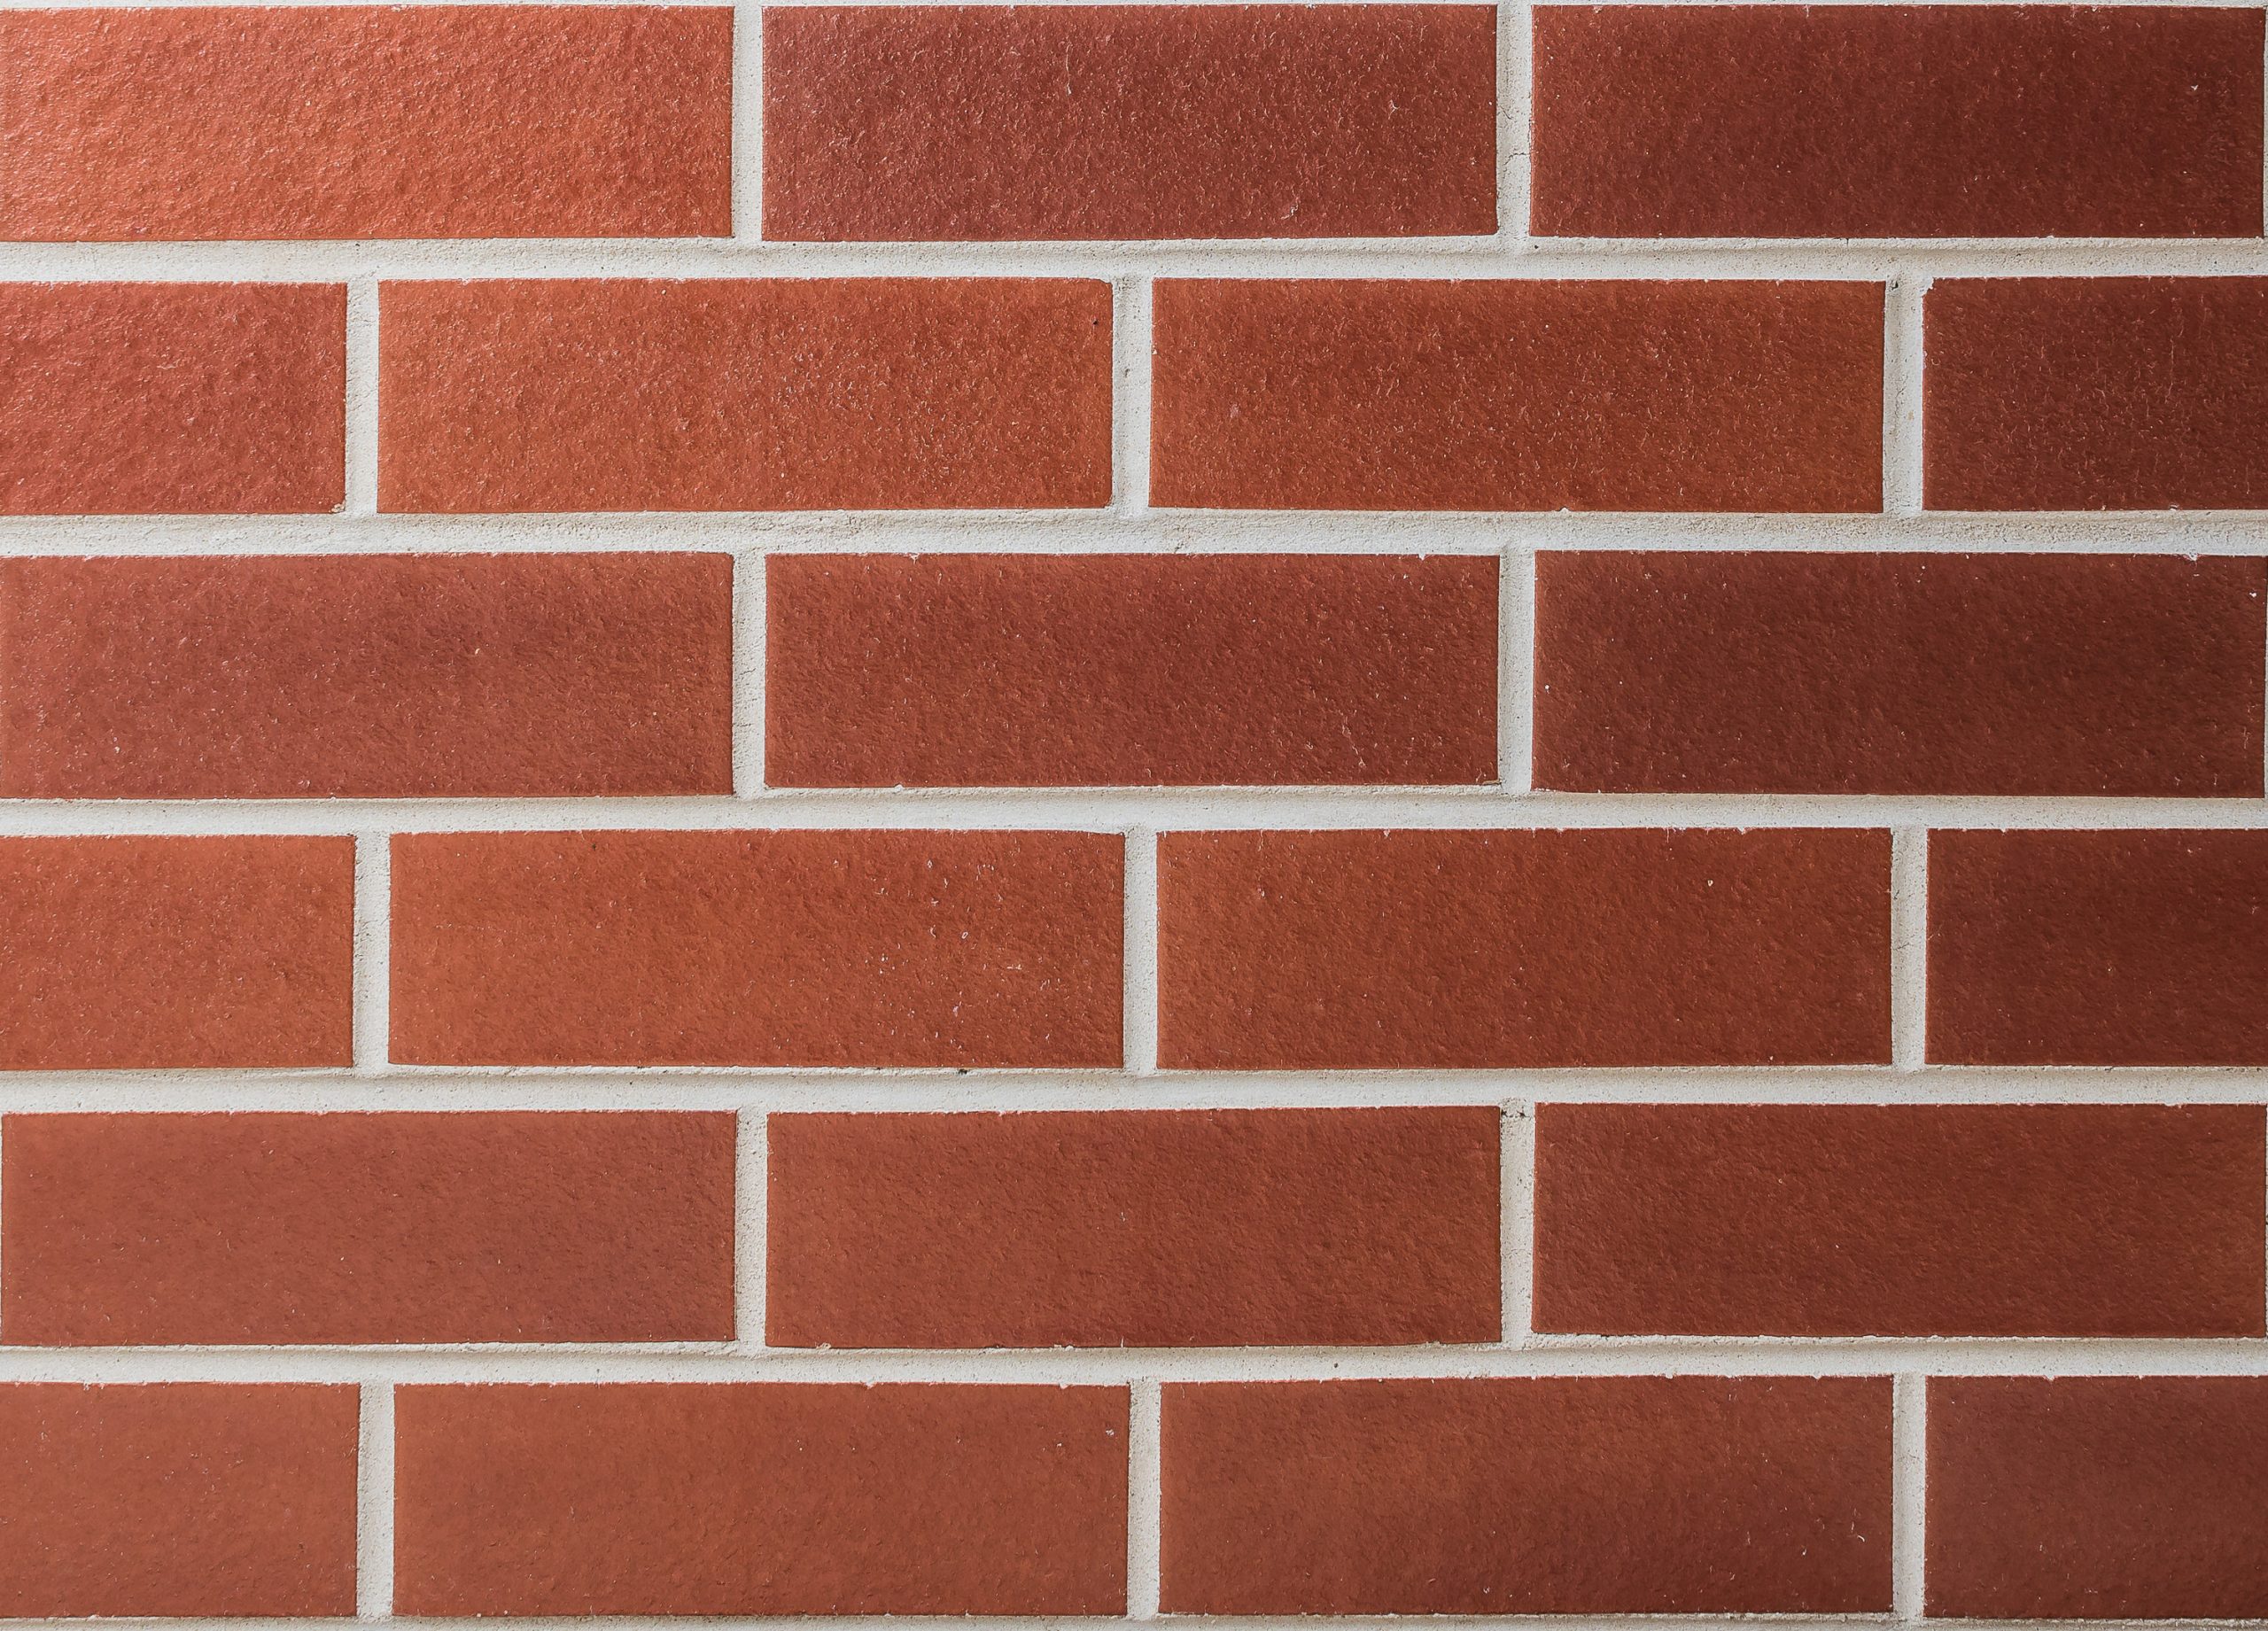 Austral Bricks Capri Glazed Face Brick (Copper) | Darling Downs Brick Sales